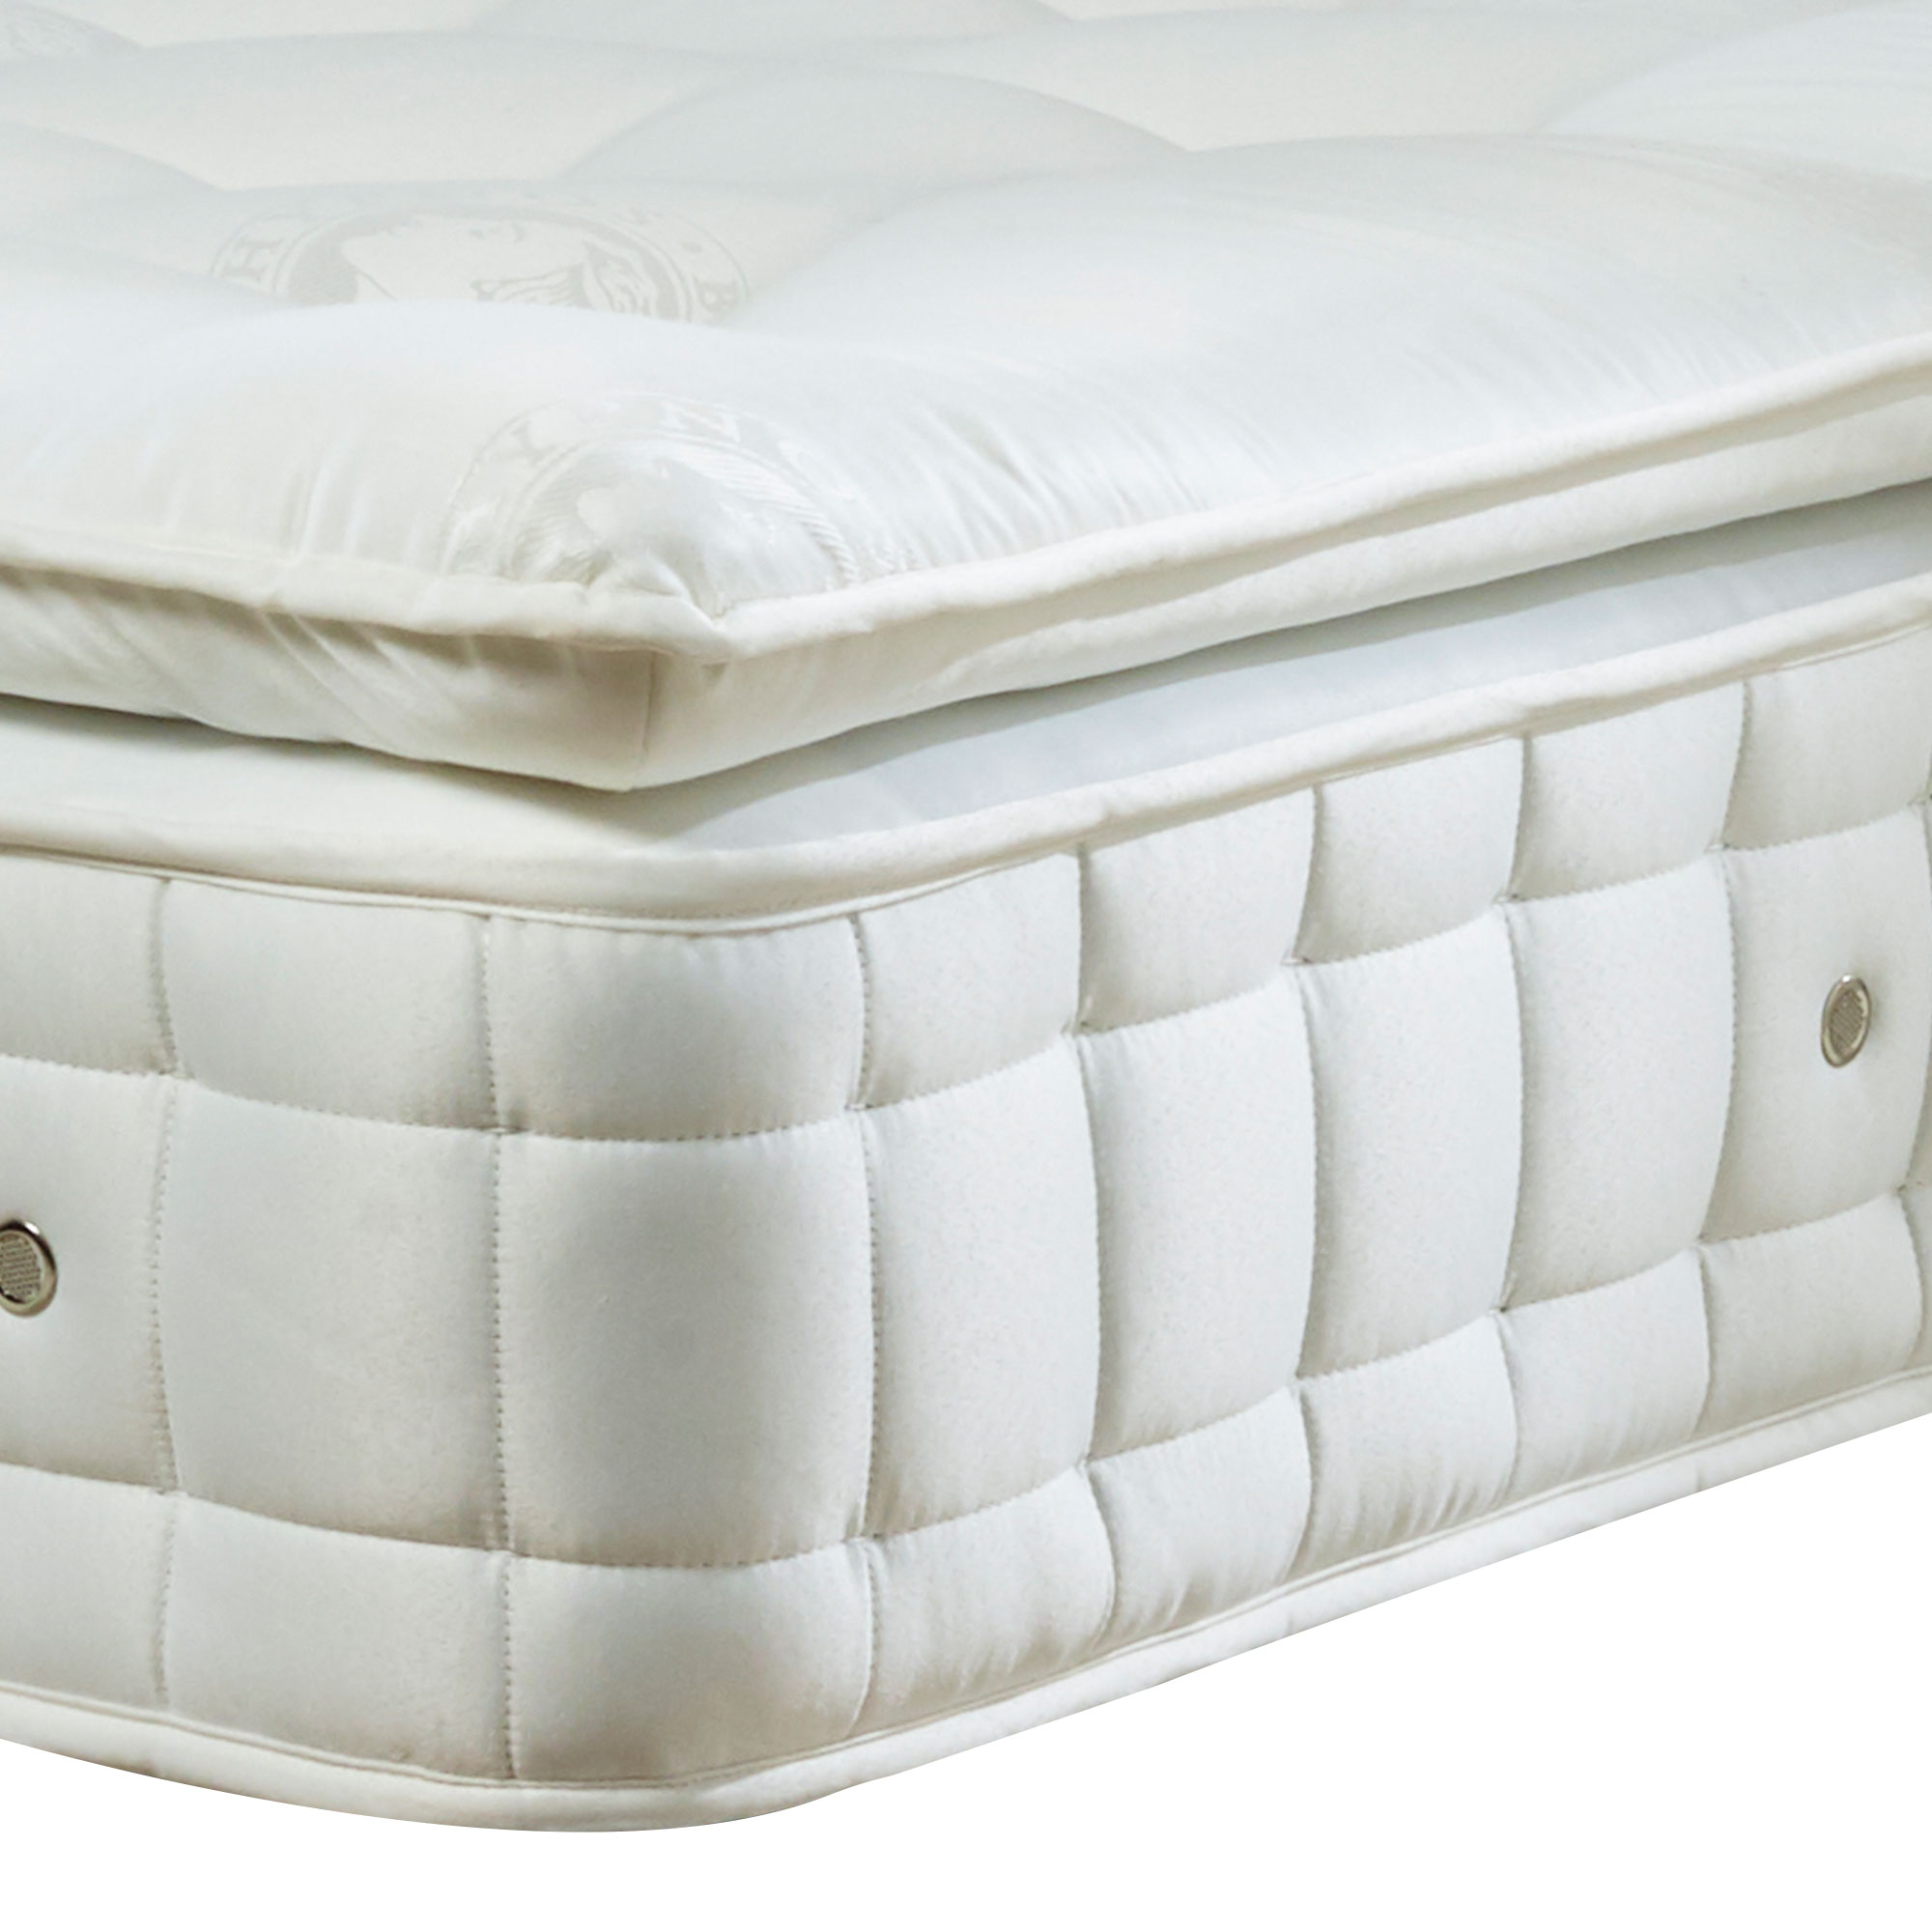 hypnos pillow top mattress king size